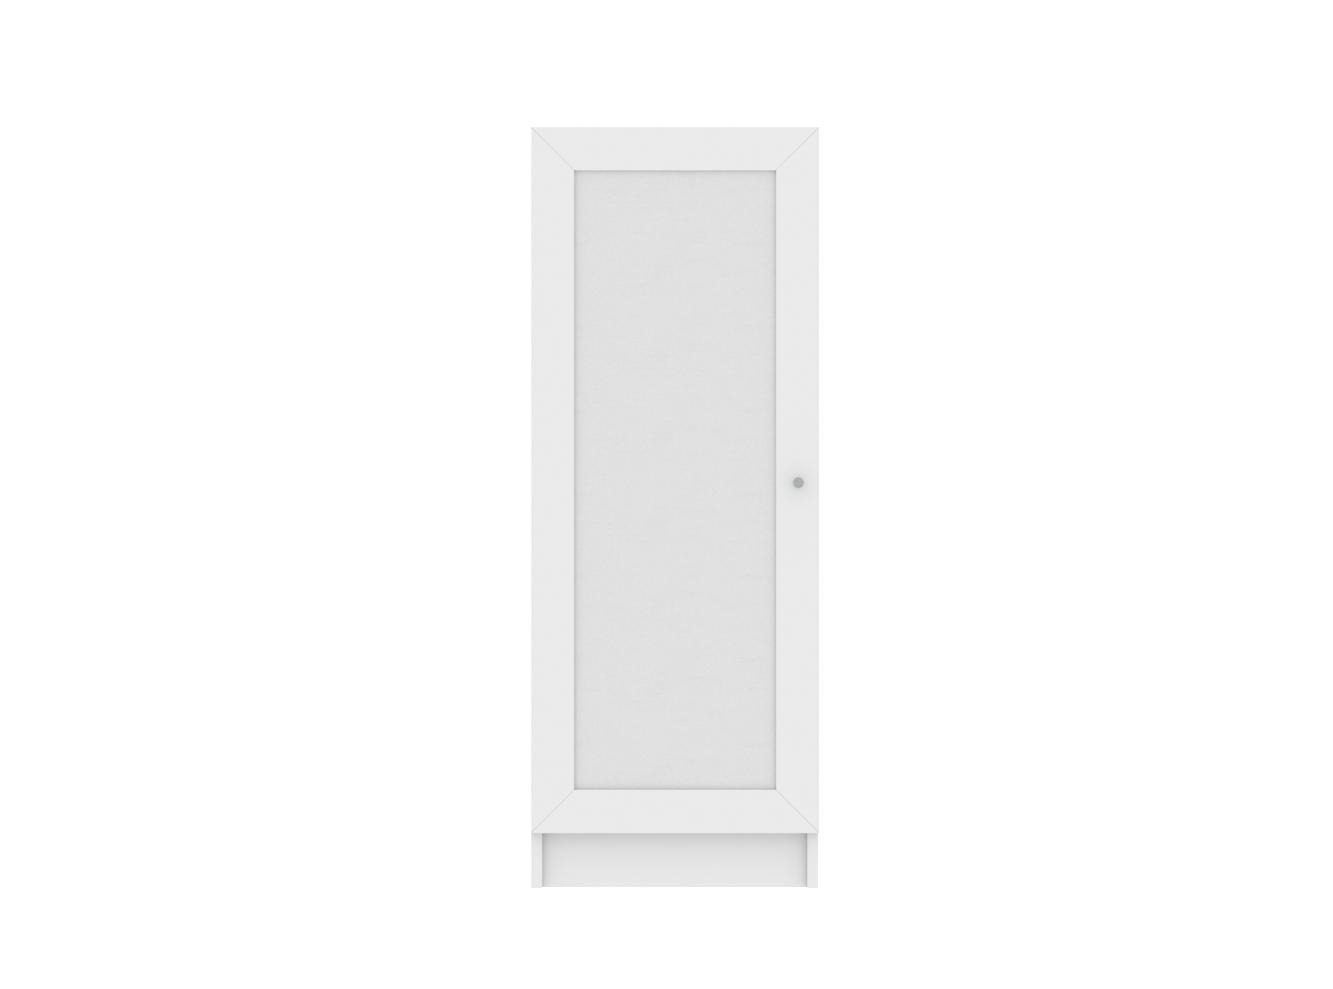 Изображение товара Стеллаж Билли 127 white ИКЕА (IKEA), 40x30x106 см на сайте adeta.ru